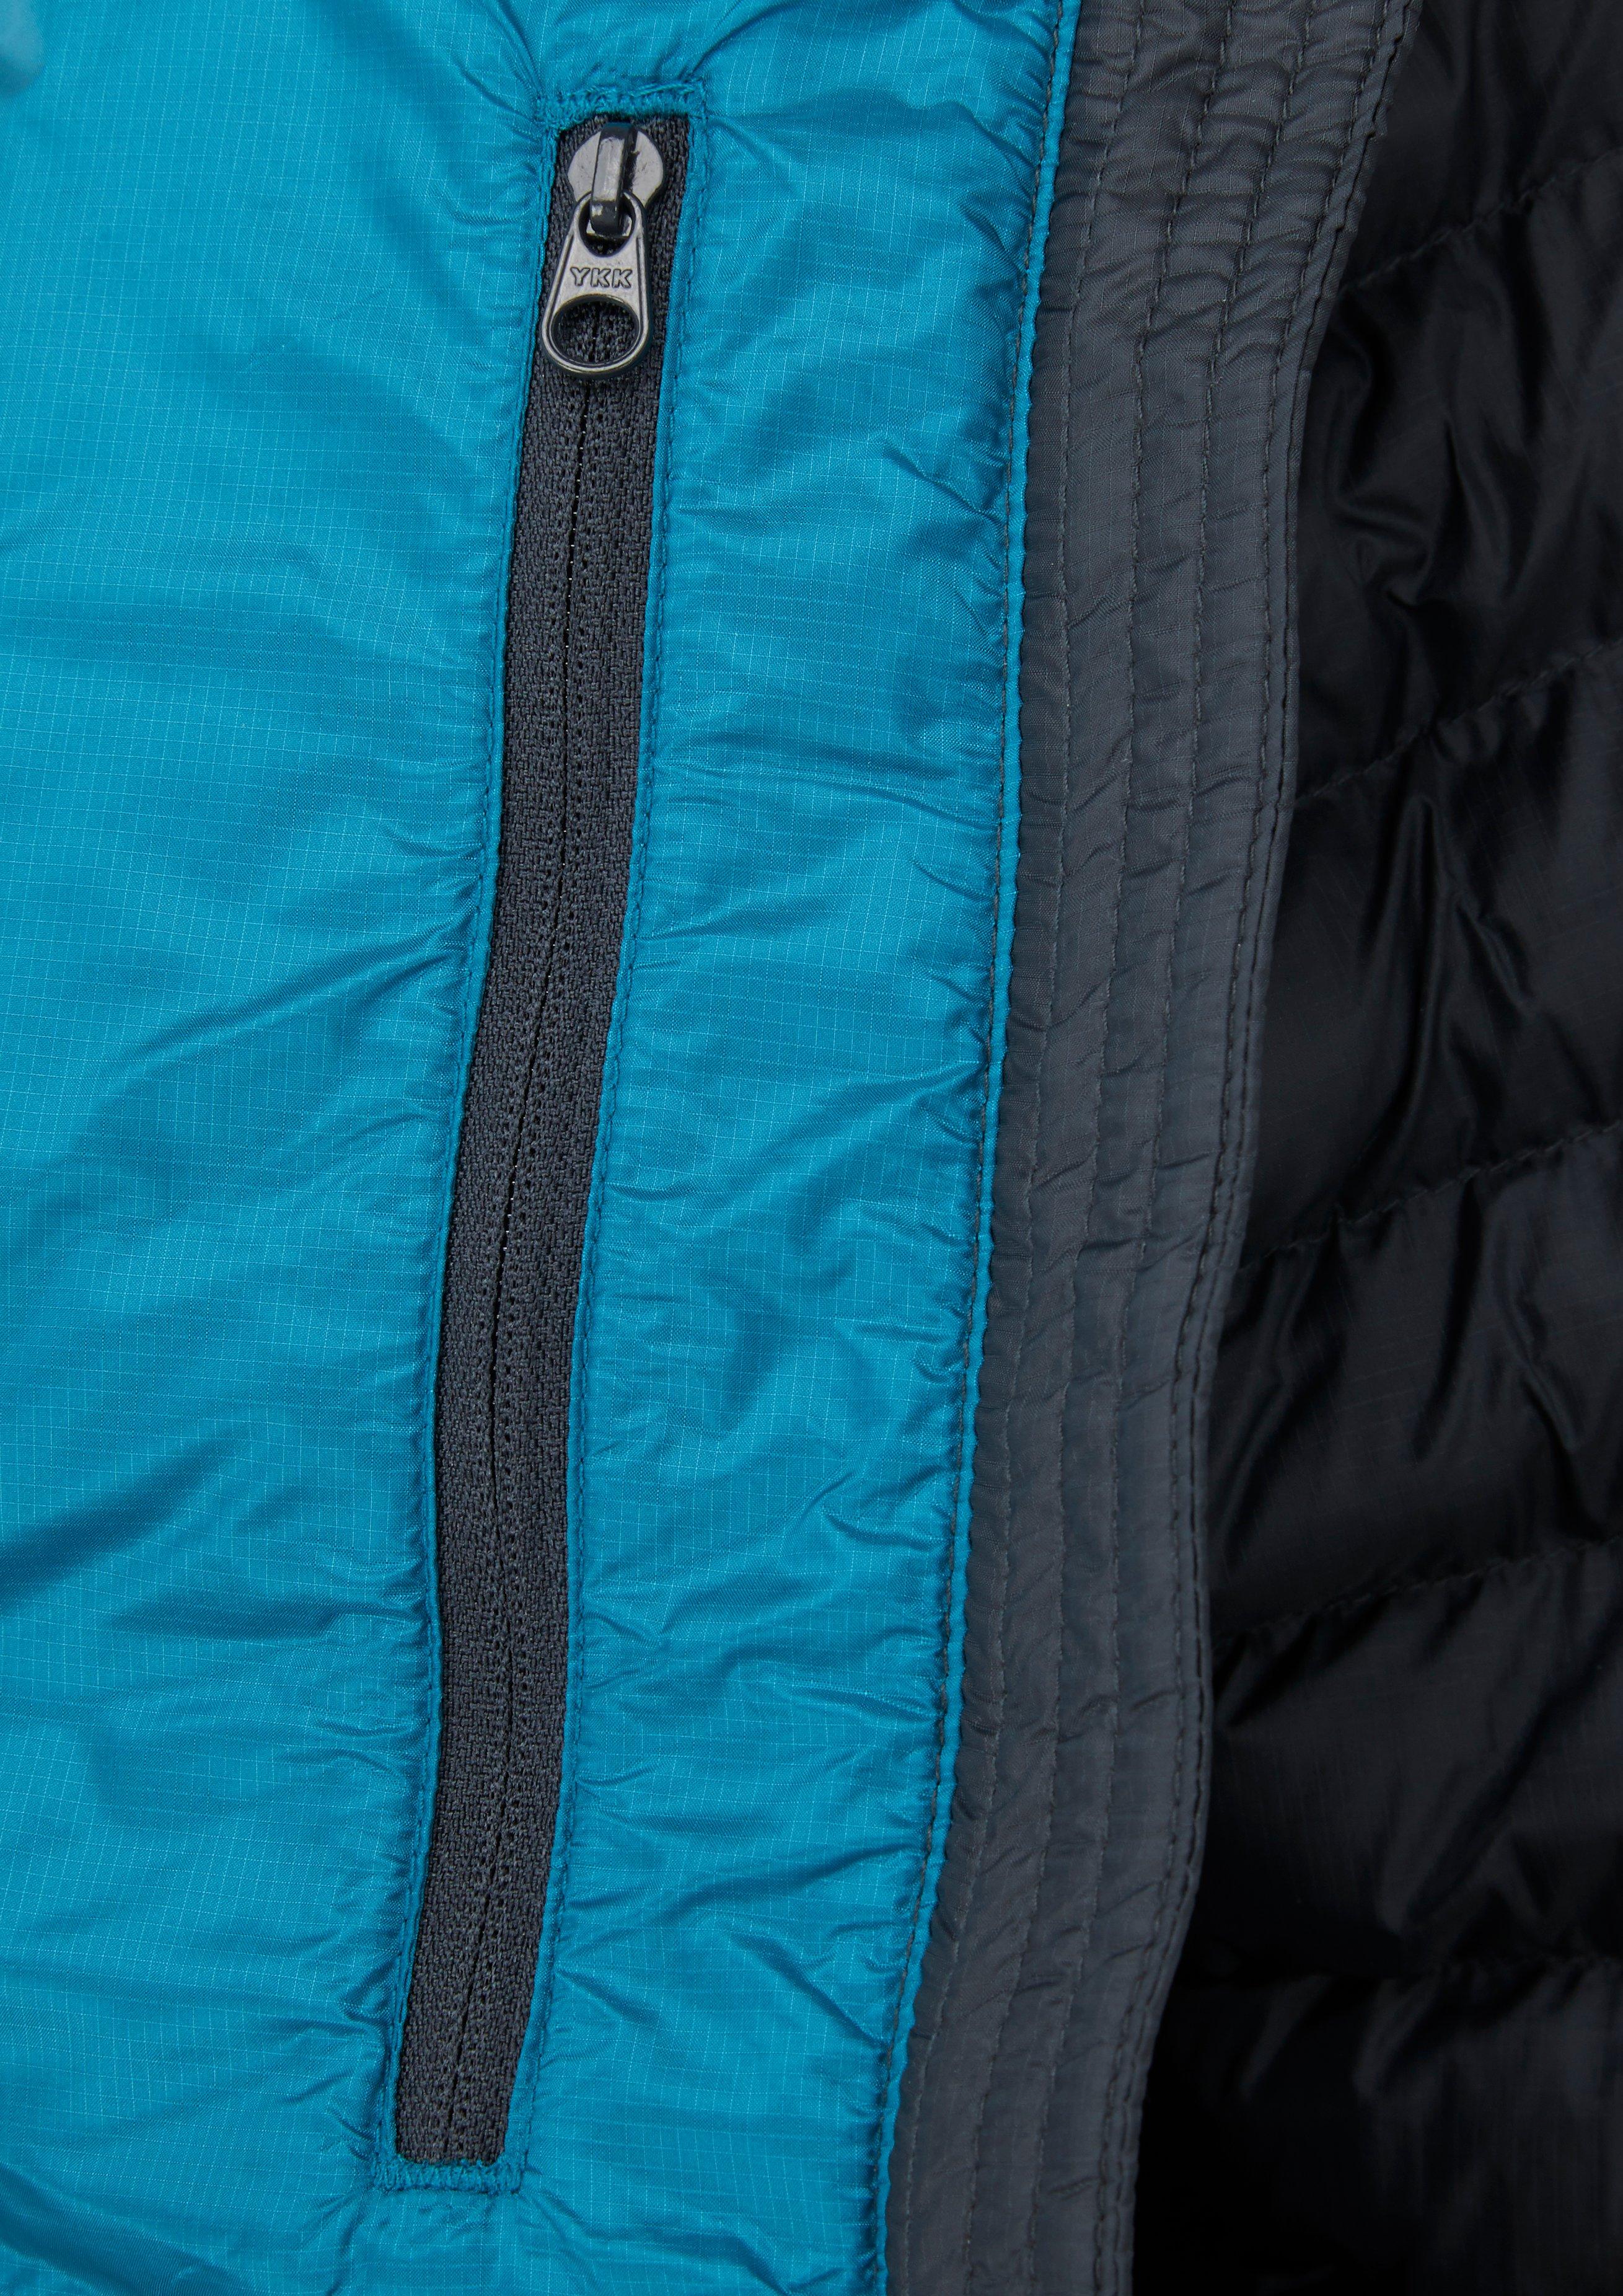 Rab - Women's Cirrus Alpine Jacket - Beluga | Women's Insulation ...